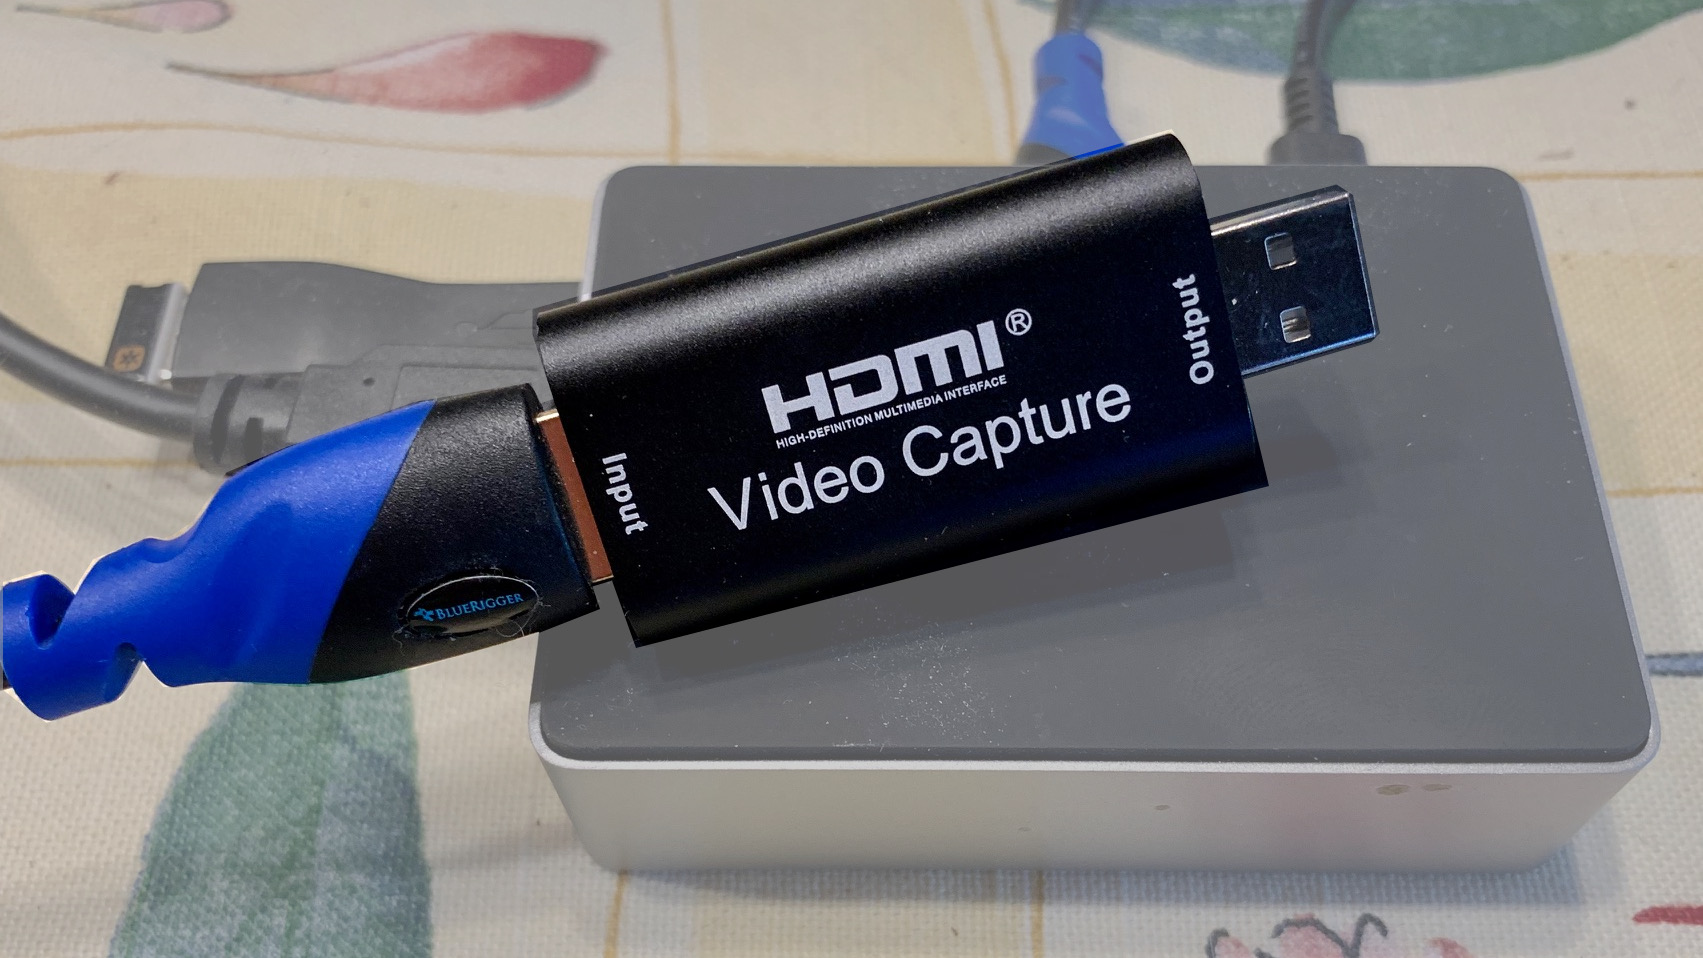 Heavy Raspberry Pi User? An HDMI-to-USB Capture Device Around | Hackaday